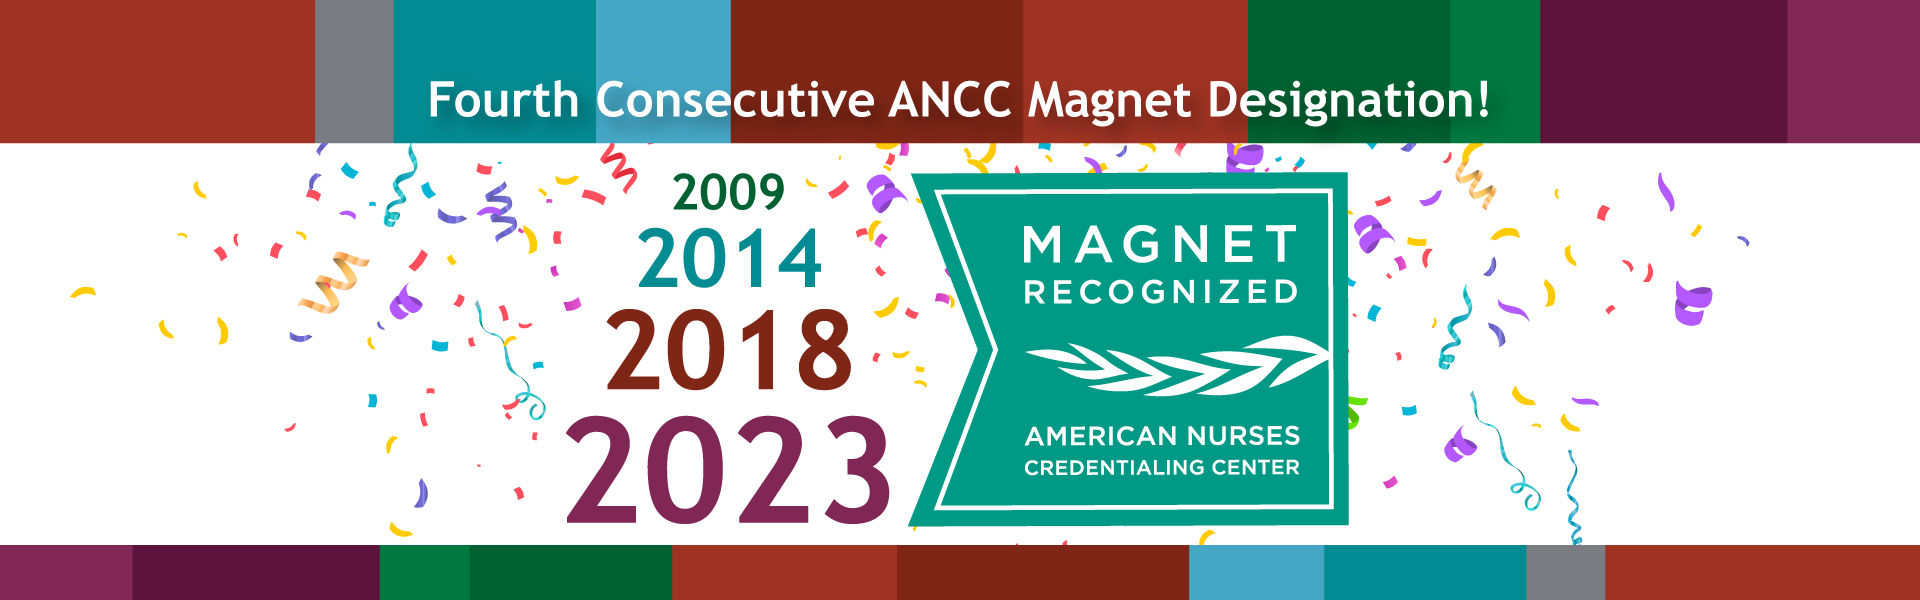 Fourth Consecutive ANCC Magnet Designation Announcement